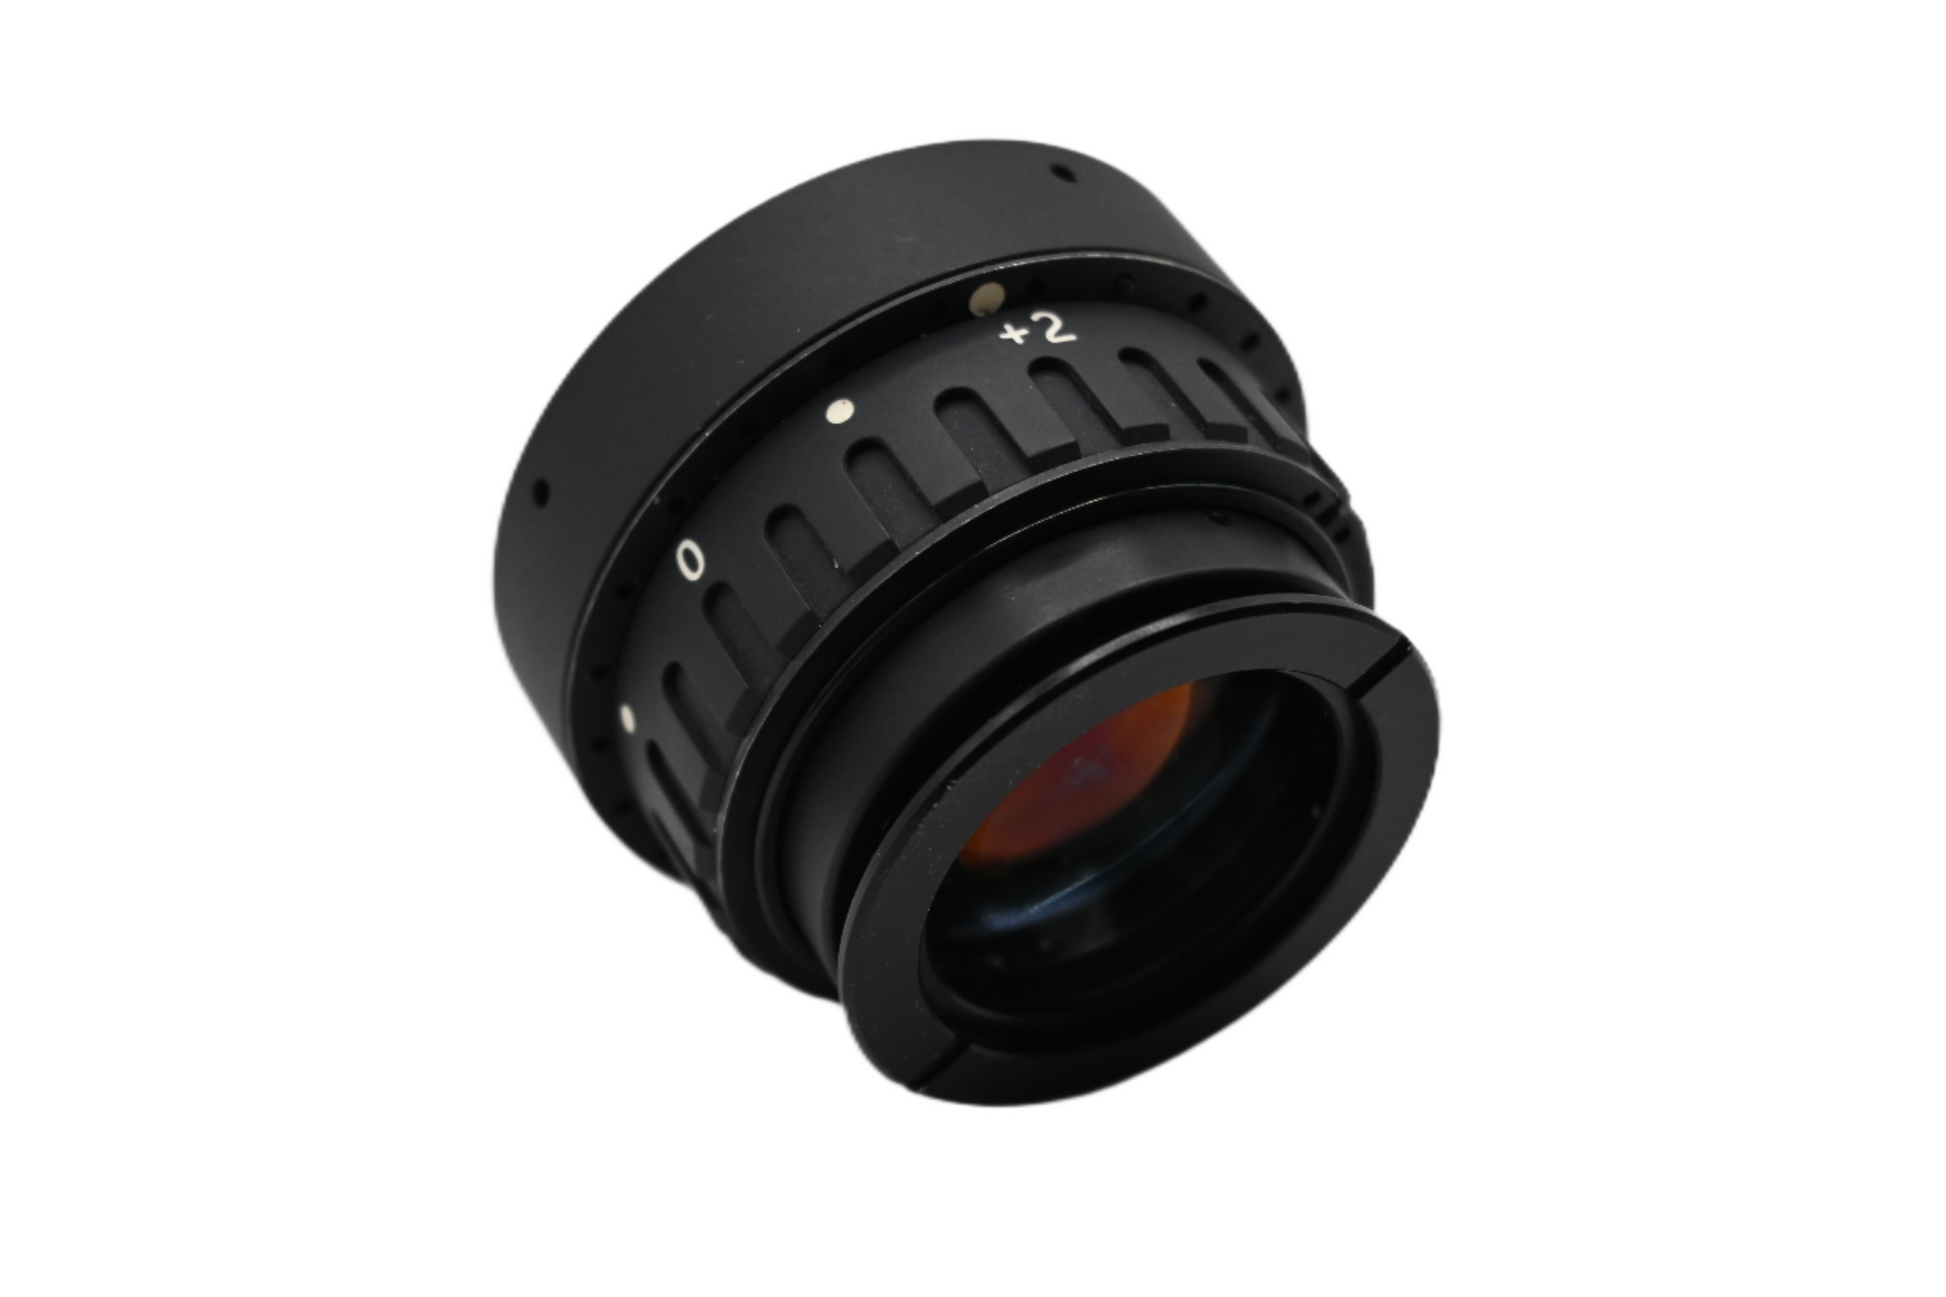 Noctis Technologies PVS-14 eyepiece